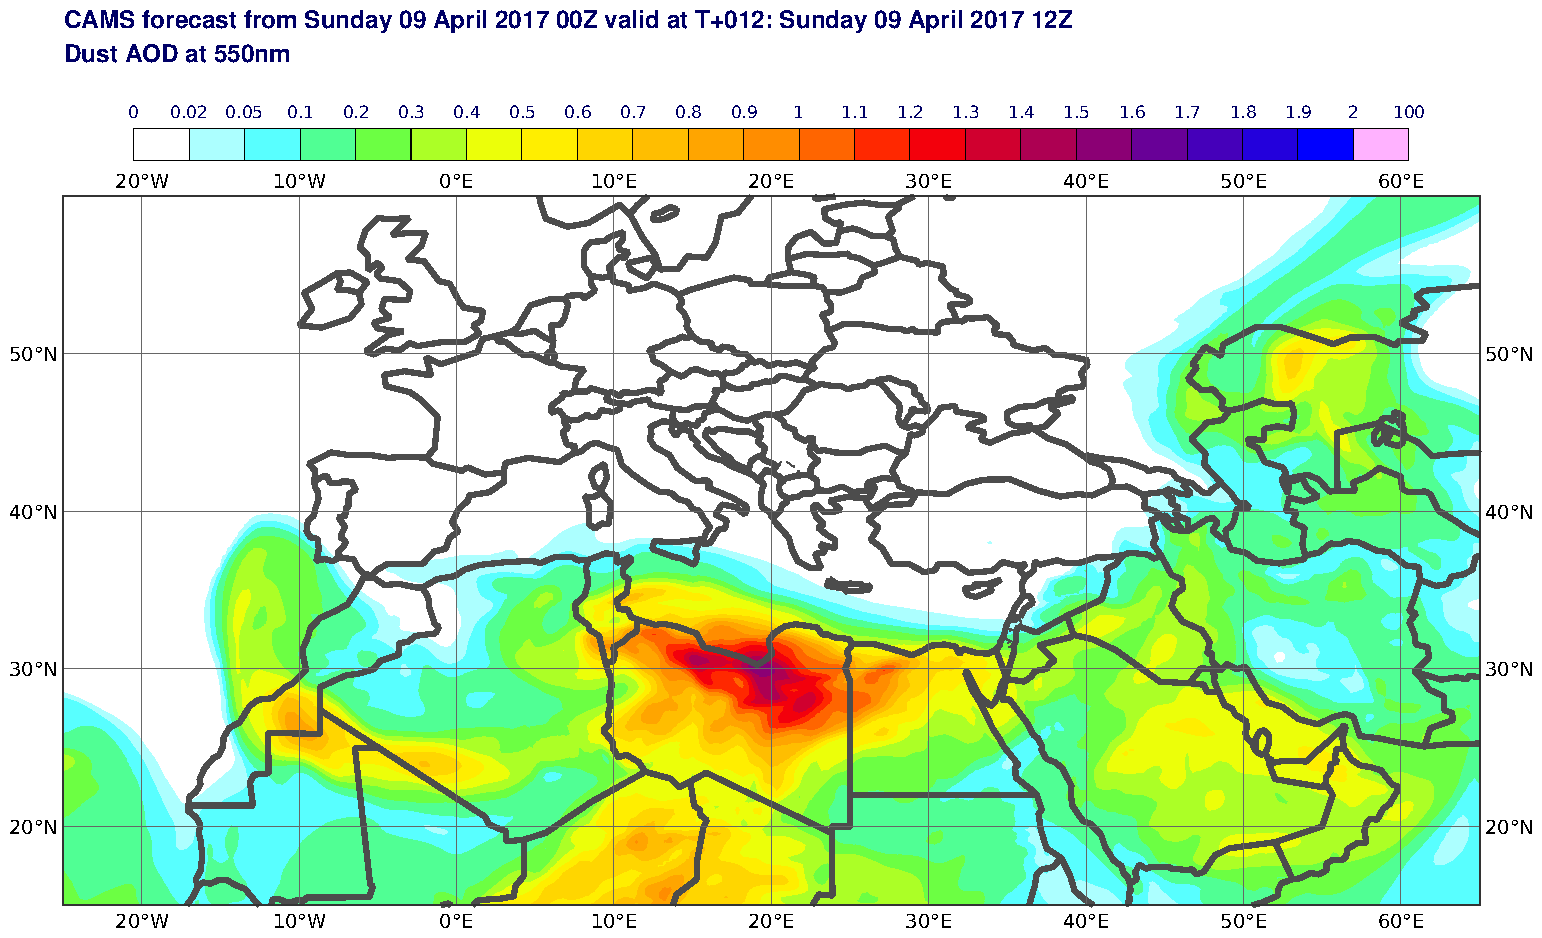 Dust AOD at 550nm valid at T12 - 2017-04-09 12:00